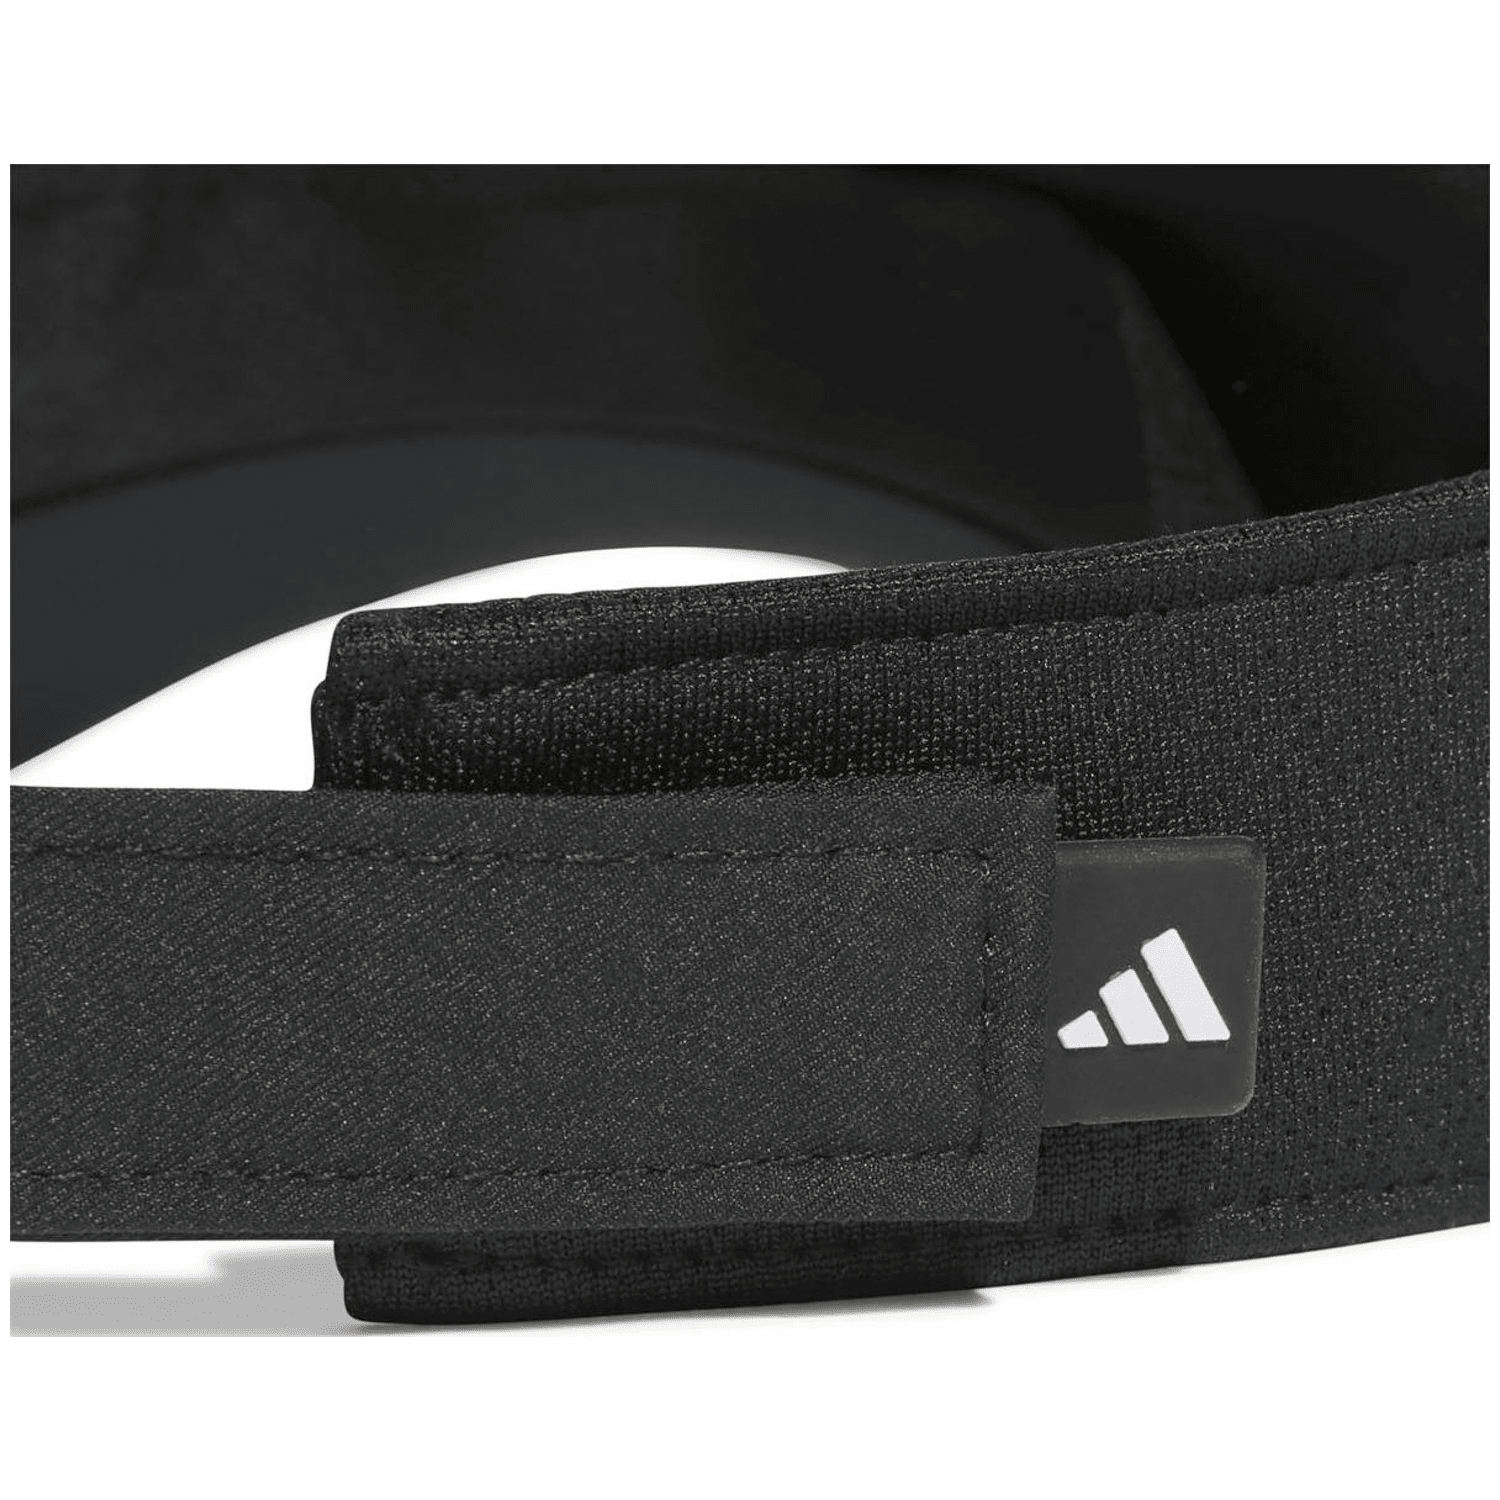 Adidas Aeroready Schirmmütze Unisex